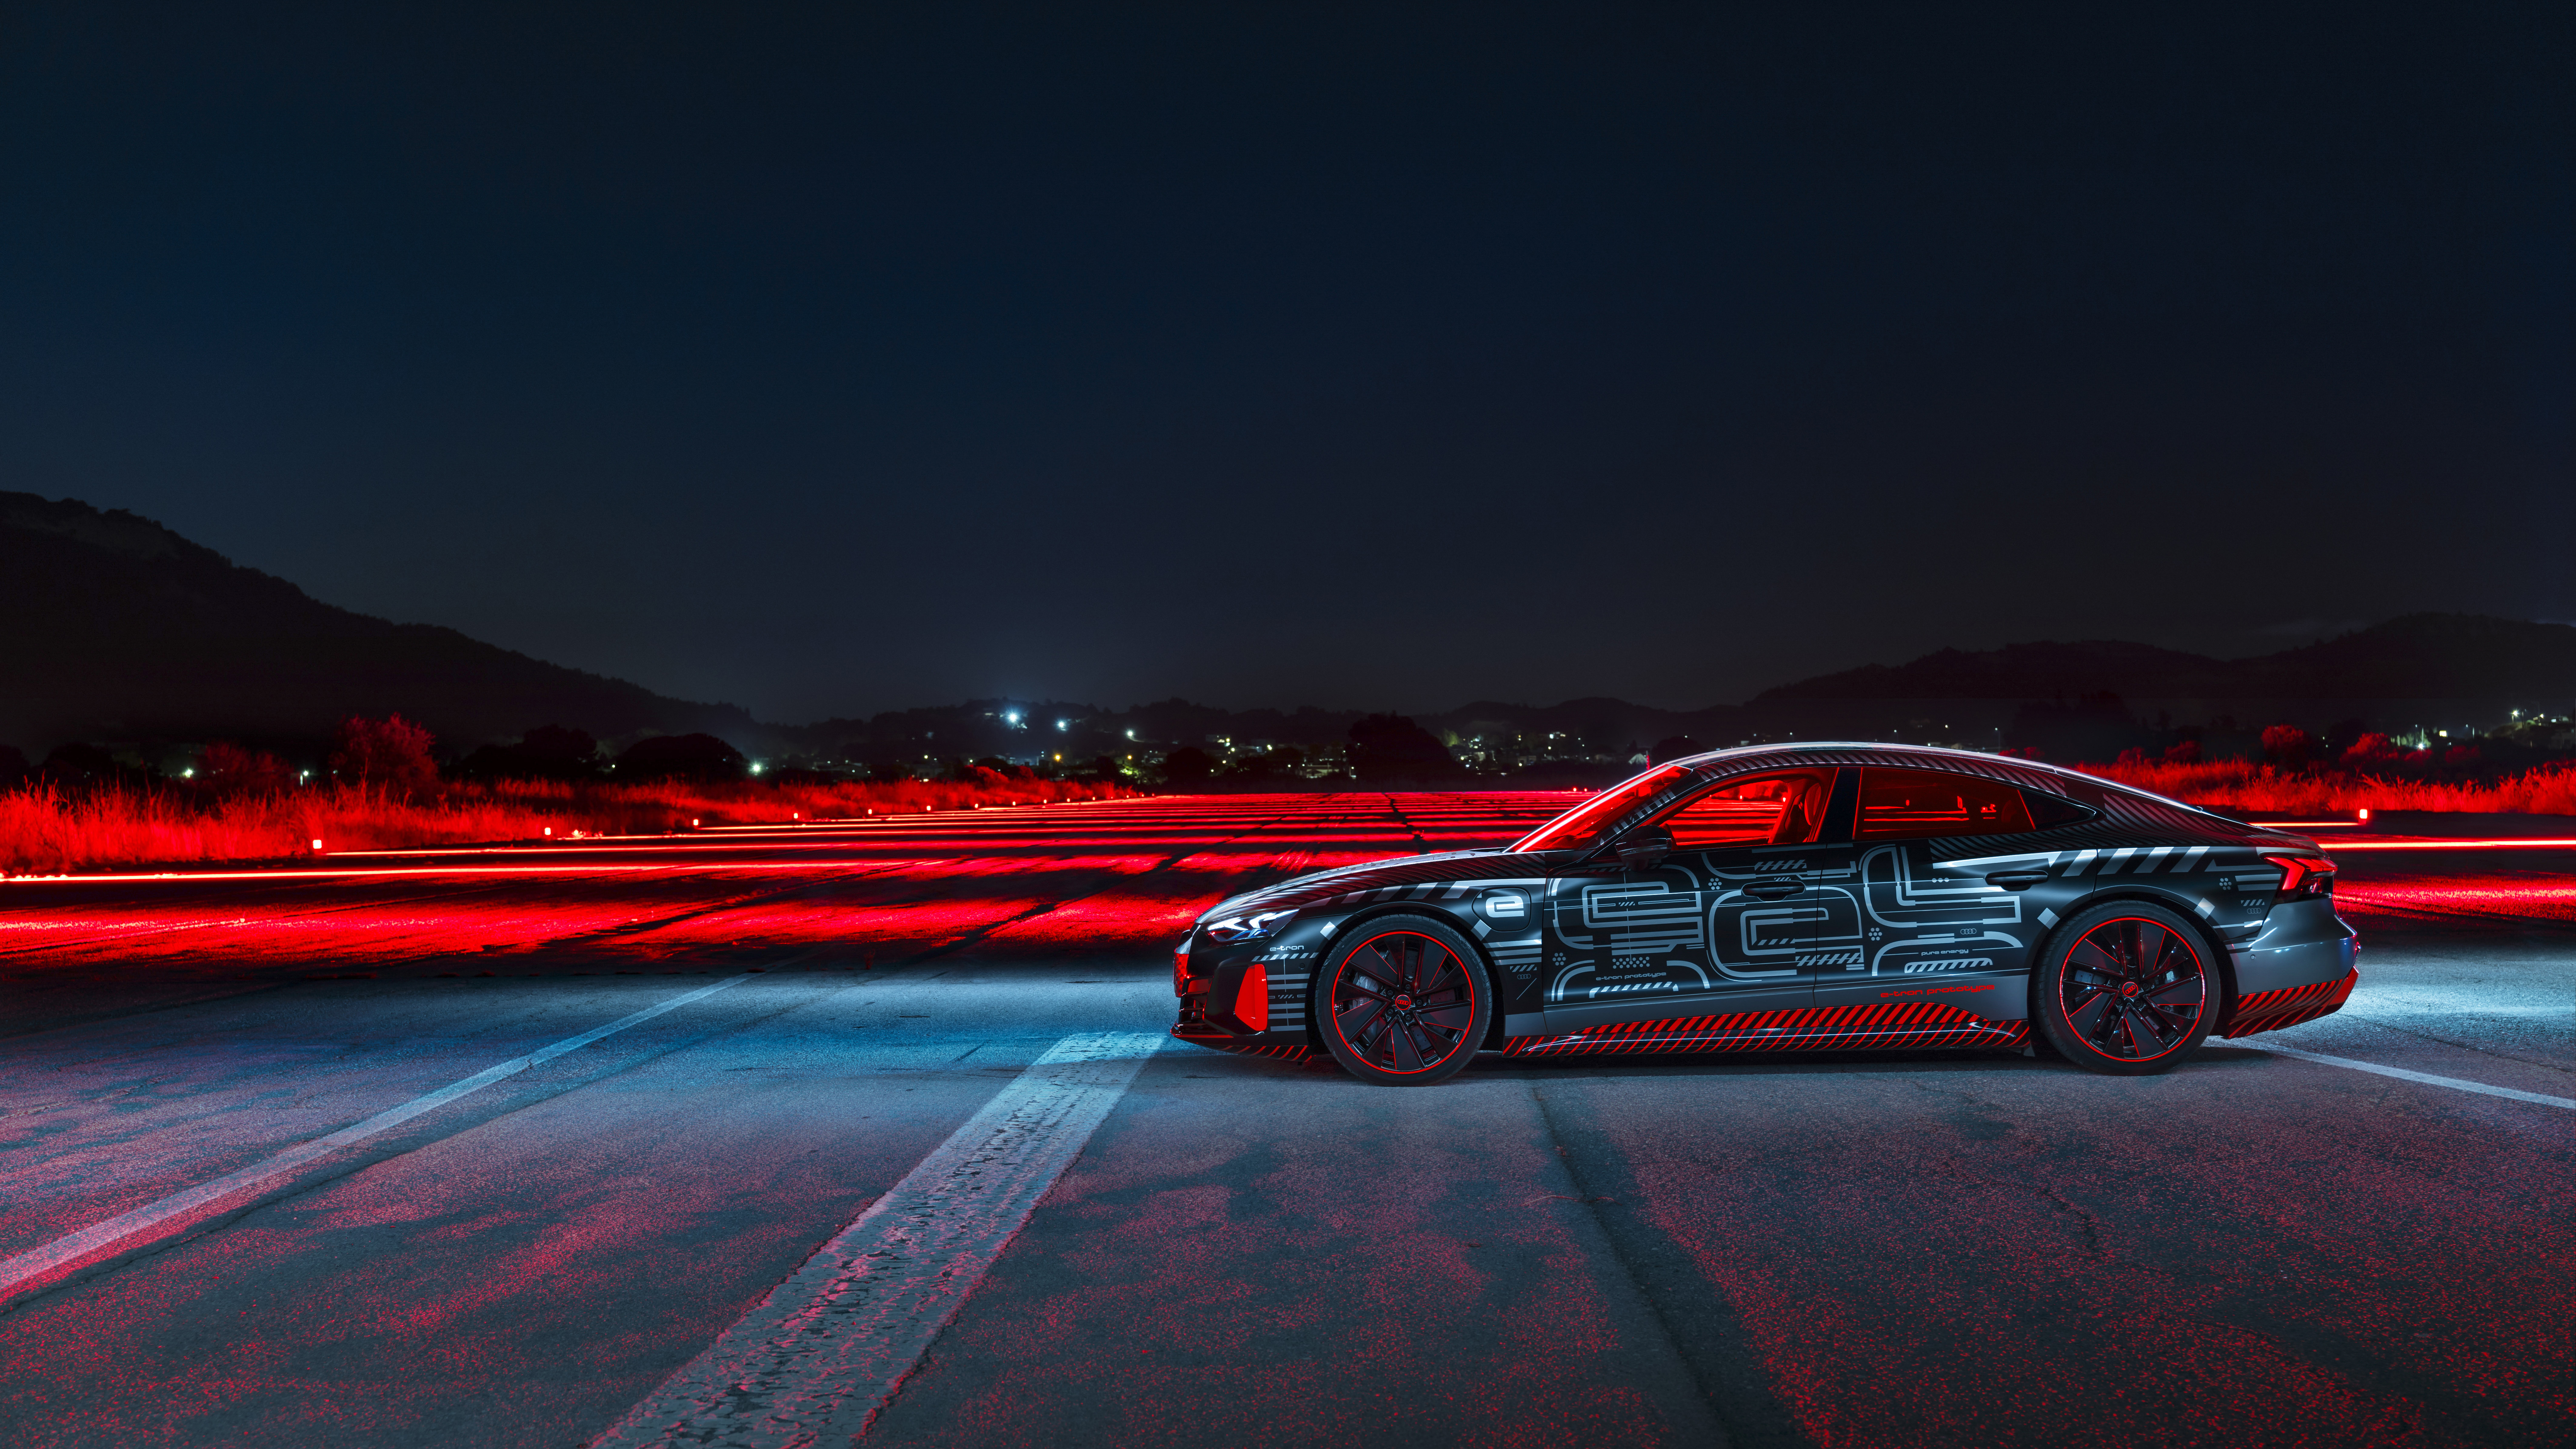 Audi E-Tron Sportback Prototype Wallpapers